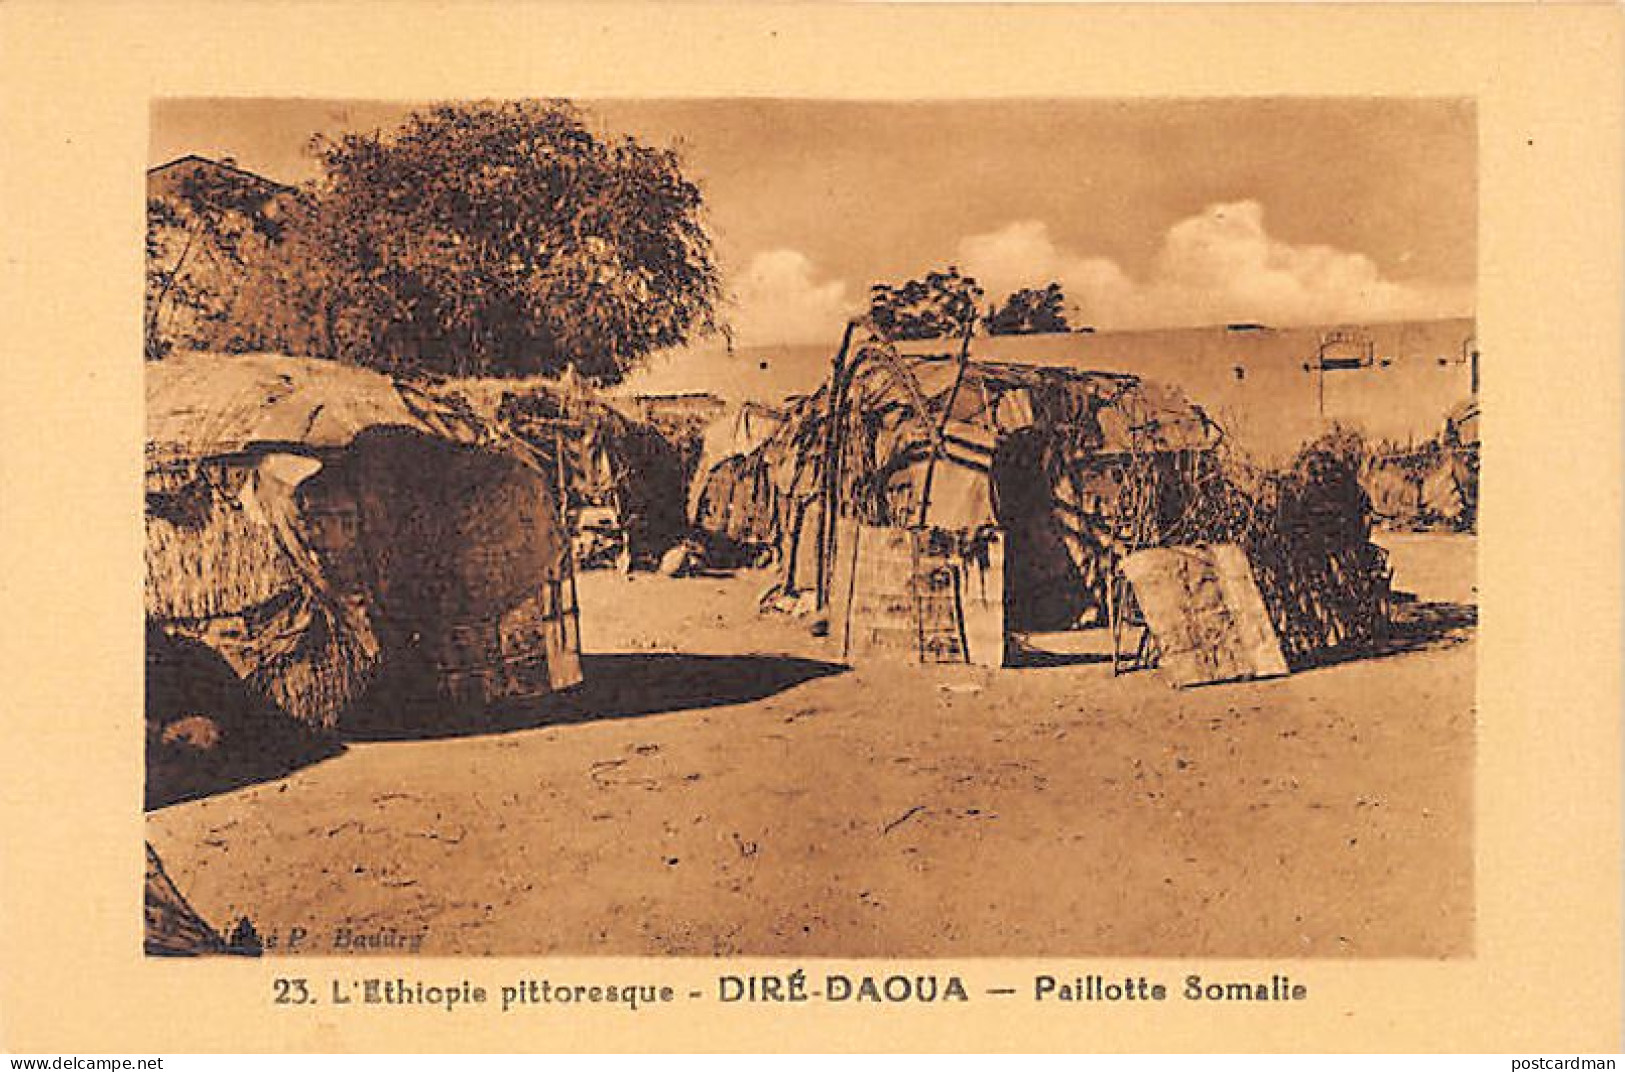 Ethiopia - DIRE DAWA - Somali Straw Hut - Publ. Printing Works Of The Dire Dawa Catholic Mission - Photographer P. Baudr - Ethiopie